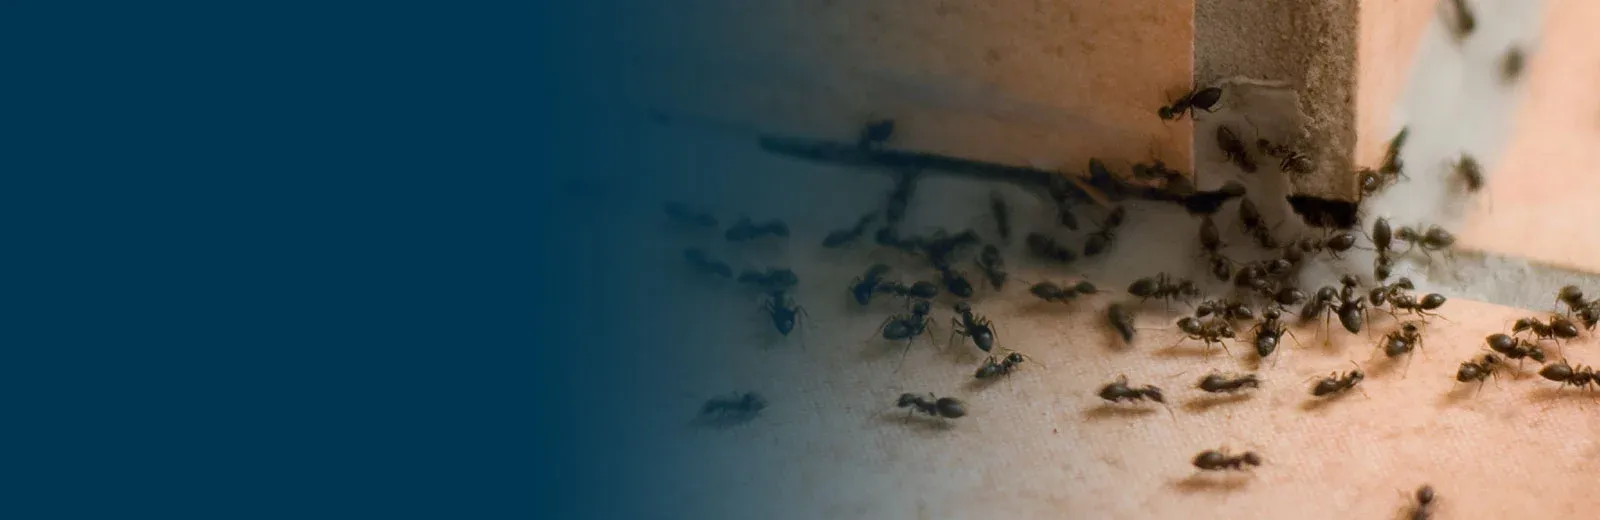 ants on tile floor in a house